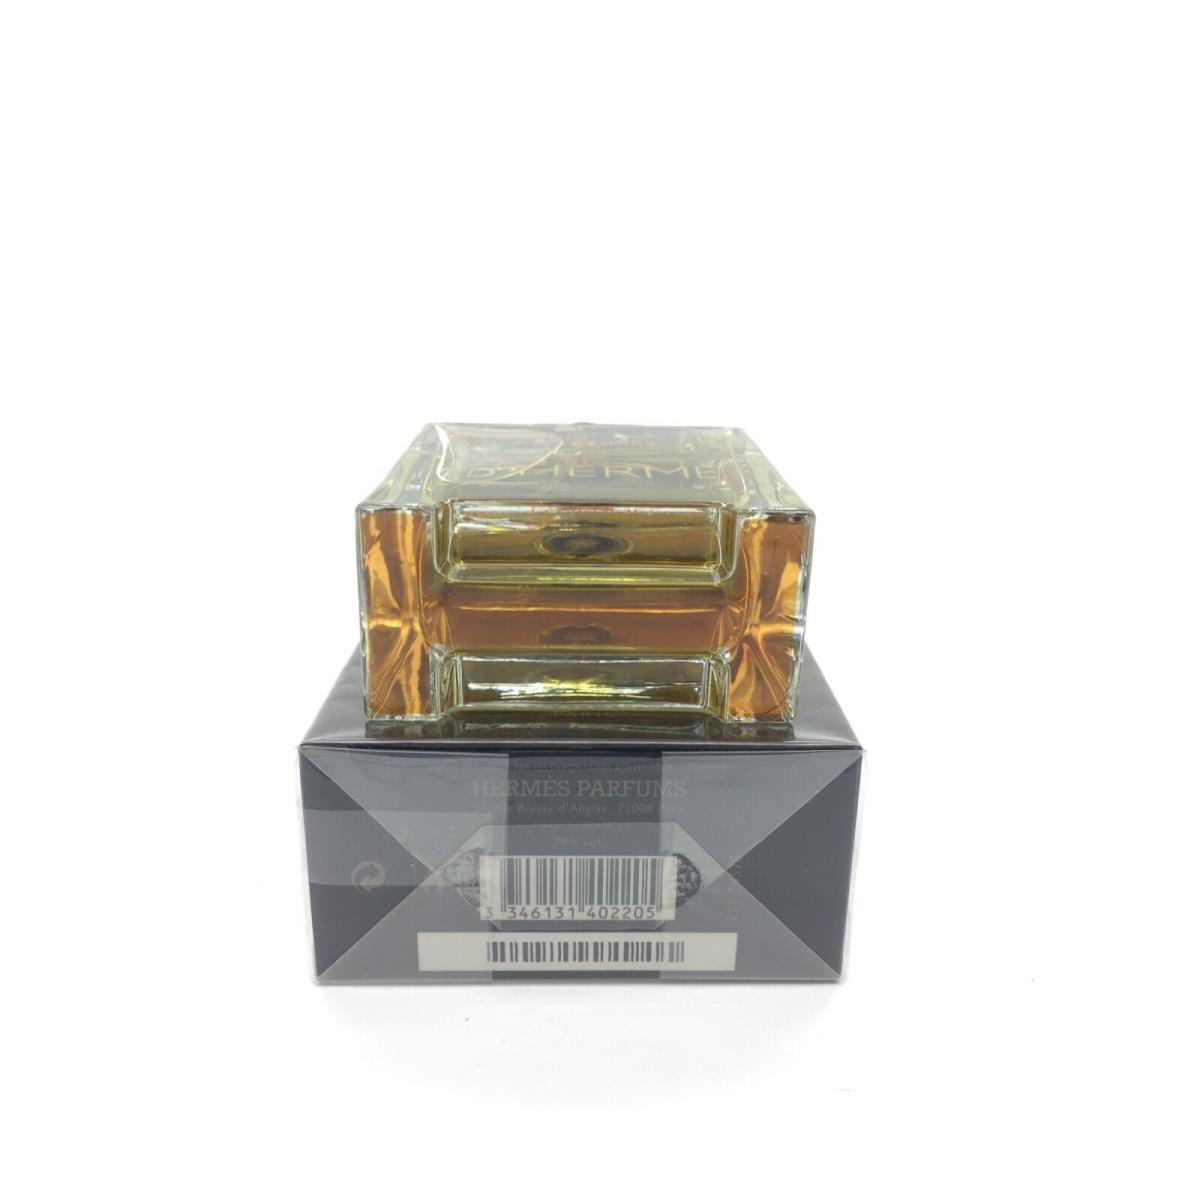 Hermes perfume,cologne,fragrance,parfum New Box Sealed 1